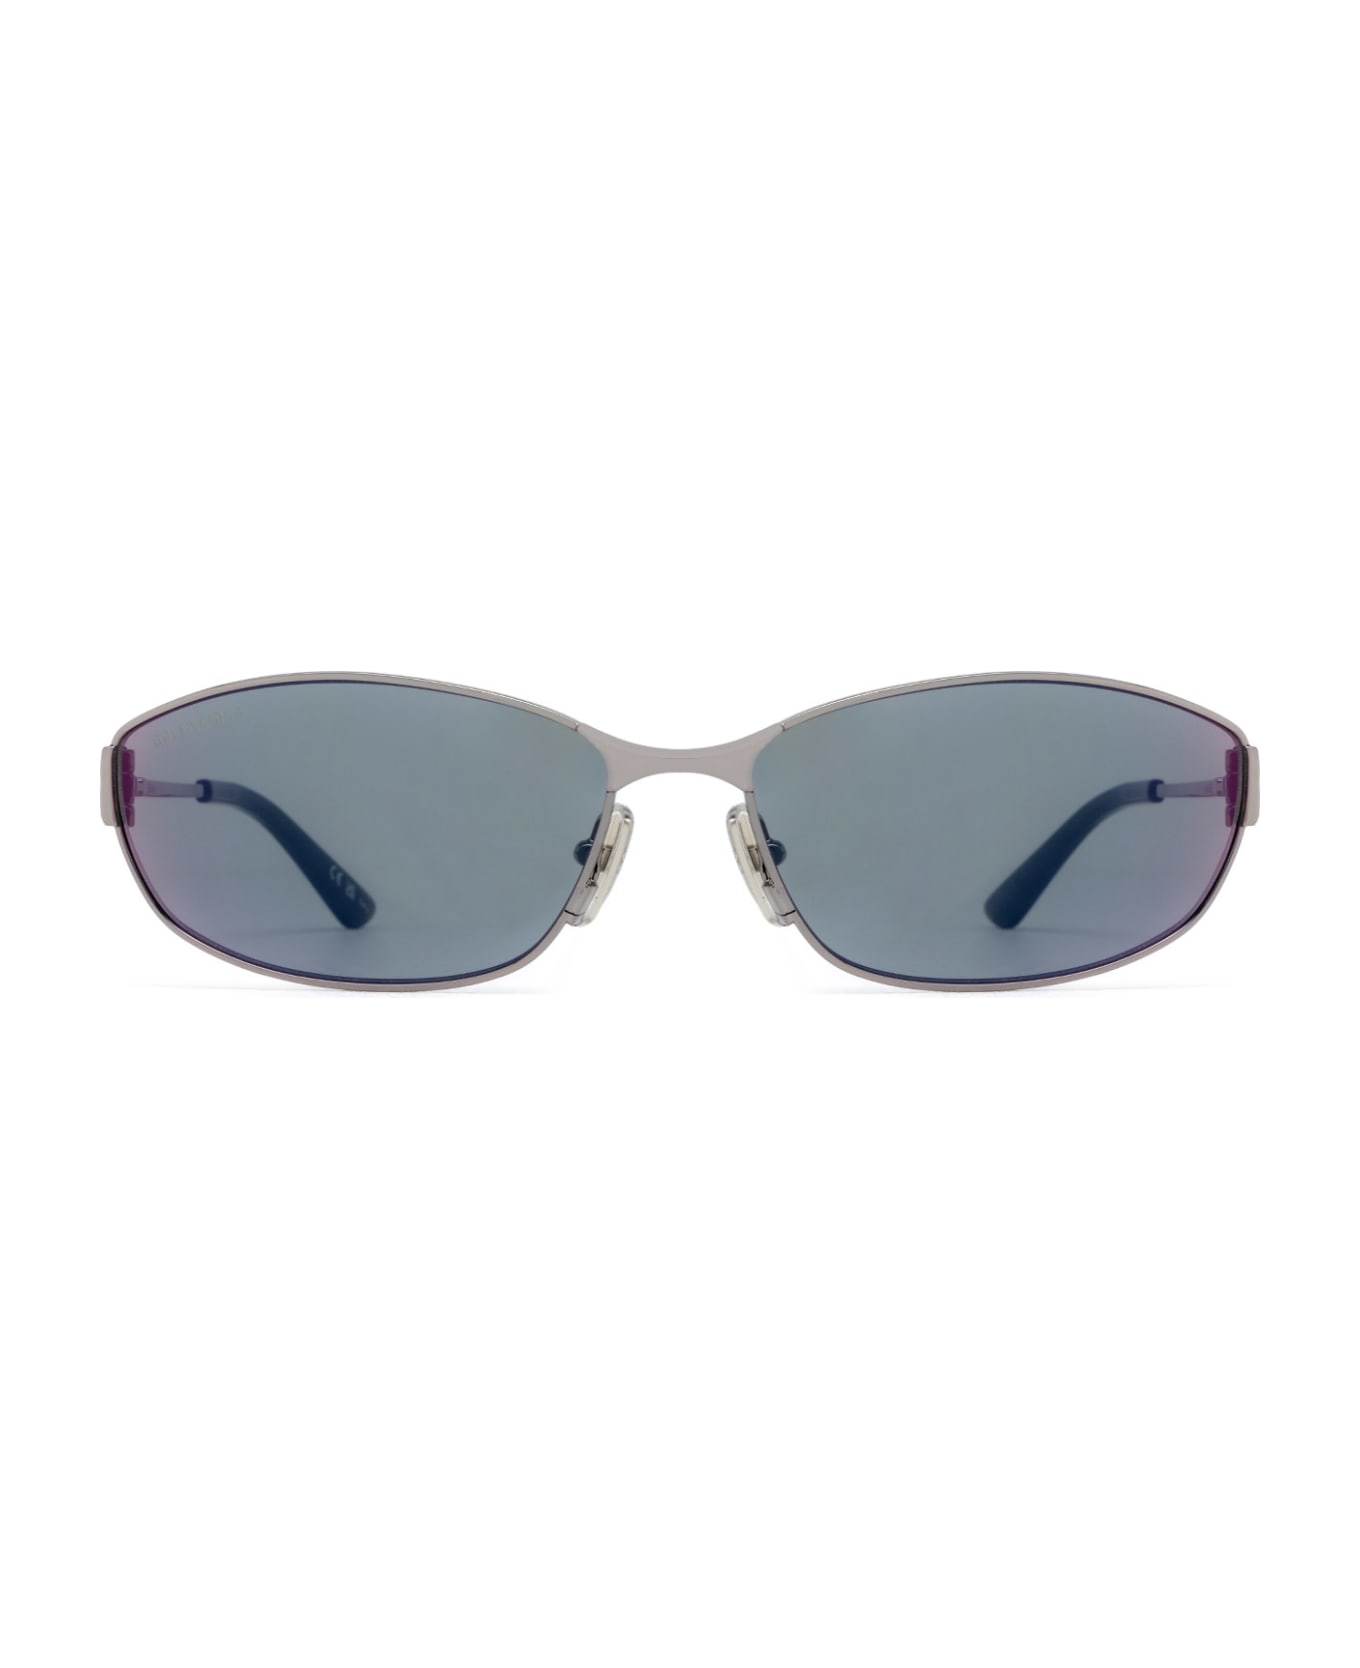 Balenciaga Eyewear Bb0336s Ruthenium Sunglasses - Ruthenium